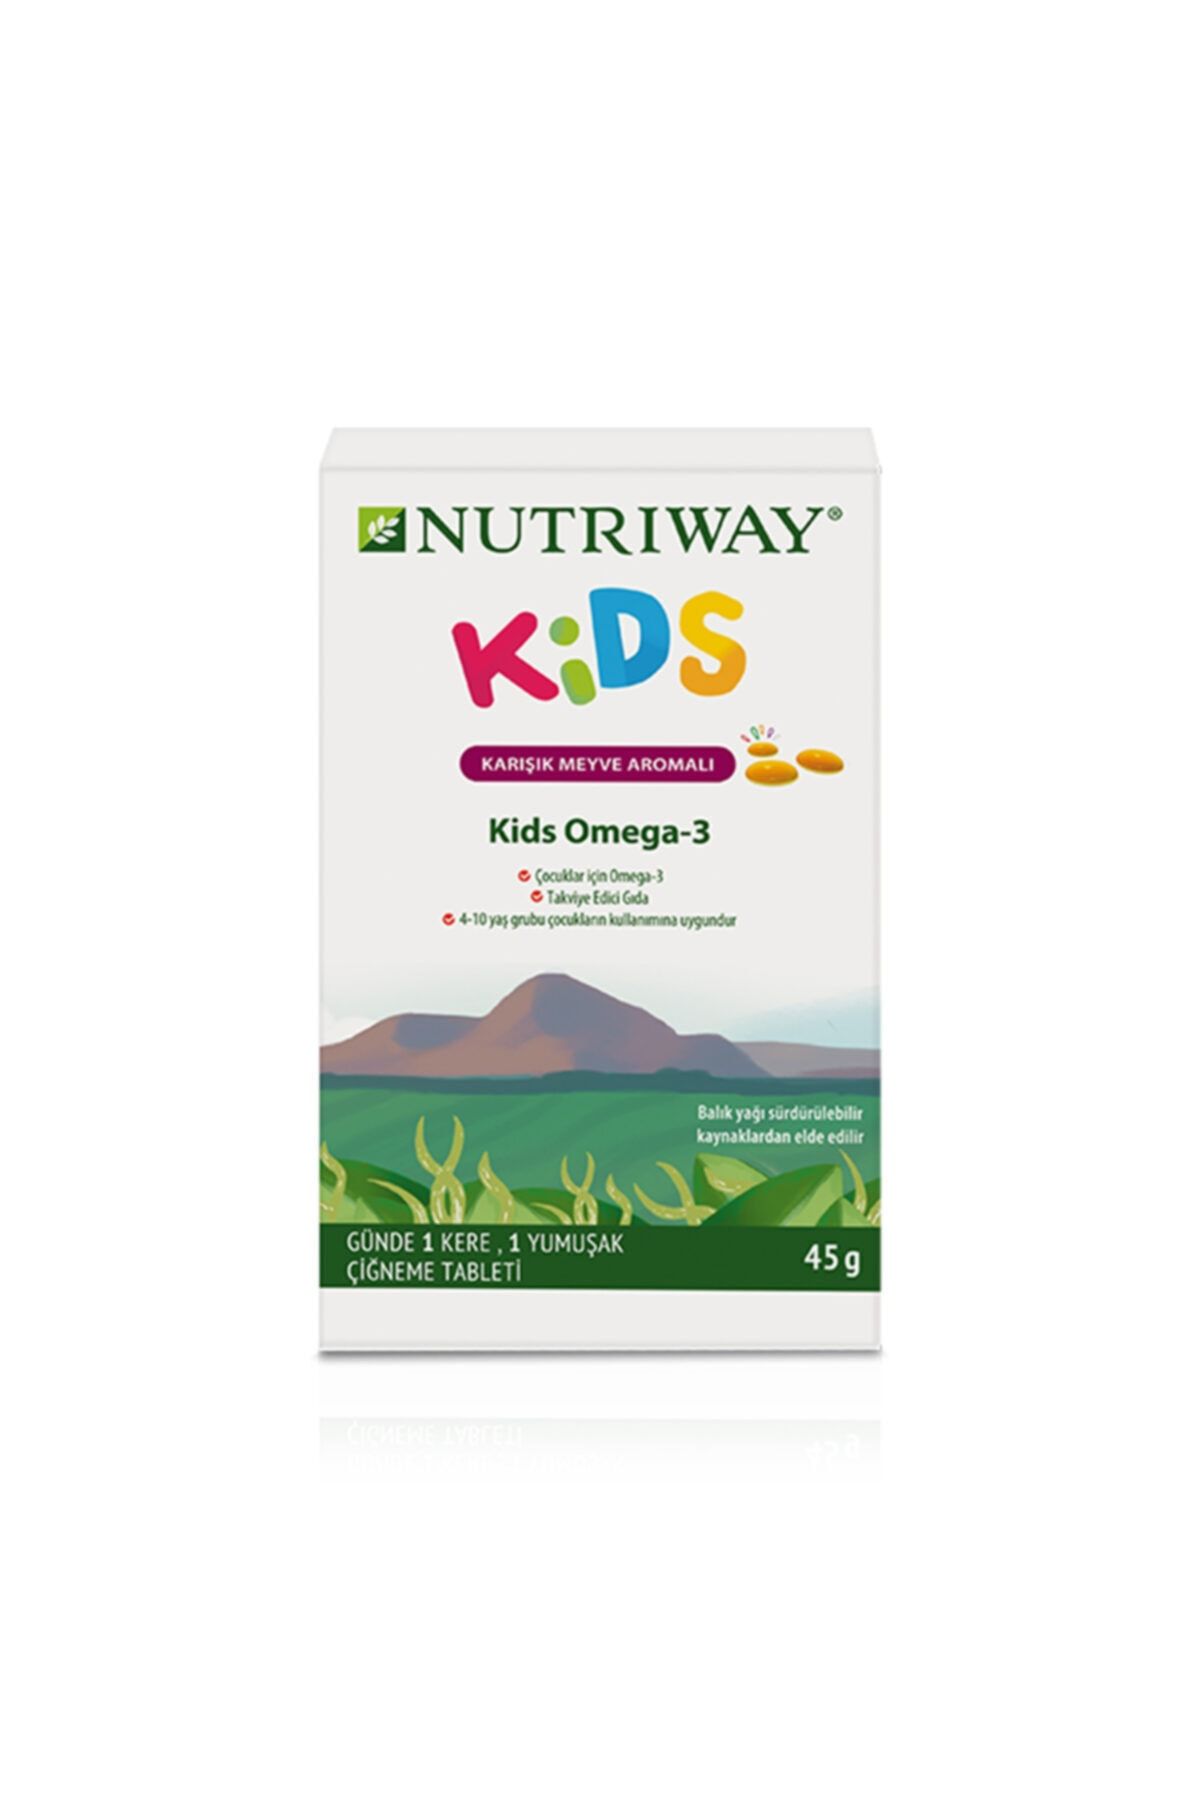 Amway Kids Omega -3 Nutrıway™ Birim: 45 G, 15 Yumuşak Çiğneme Tableti Bulunan 2 Adet Alüminyum Ambalaj